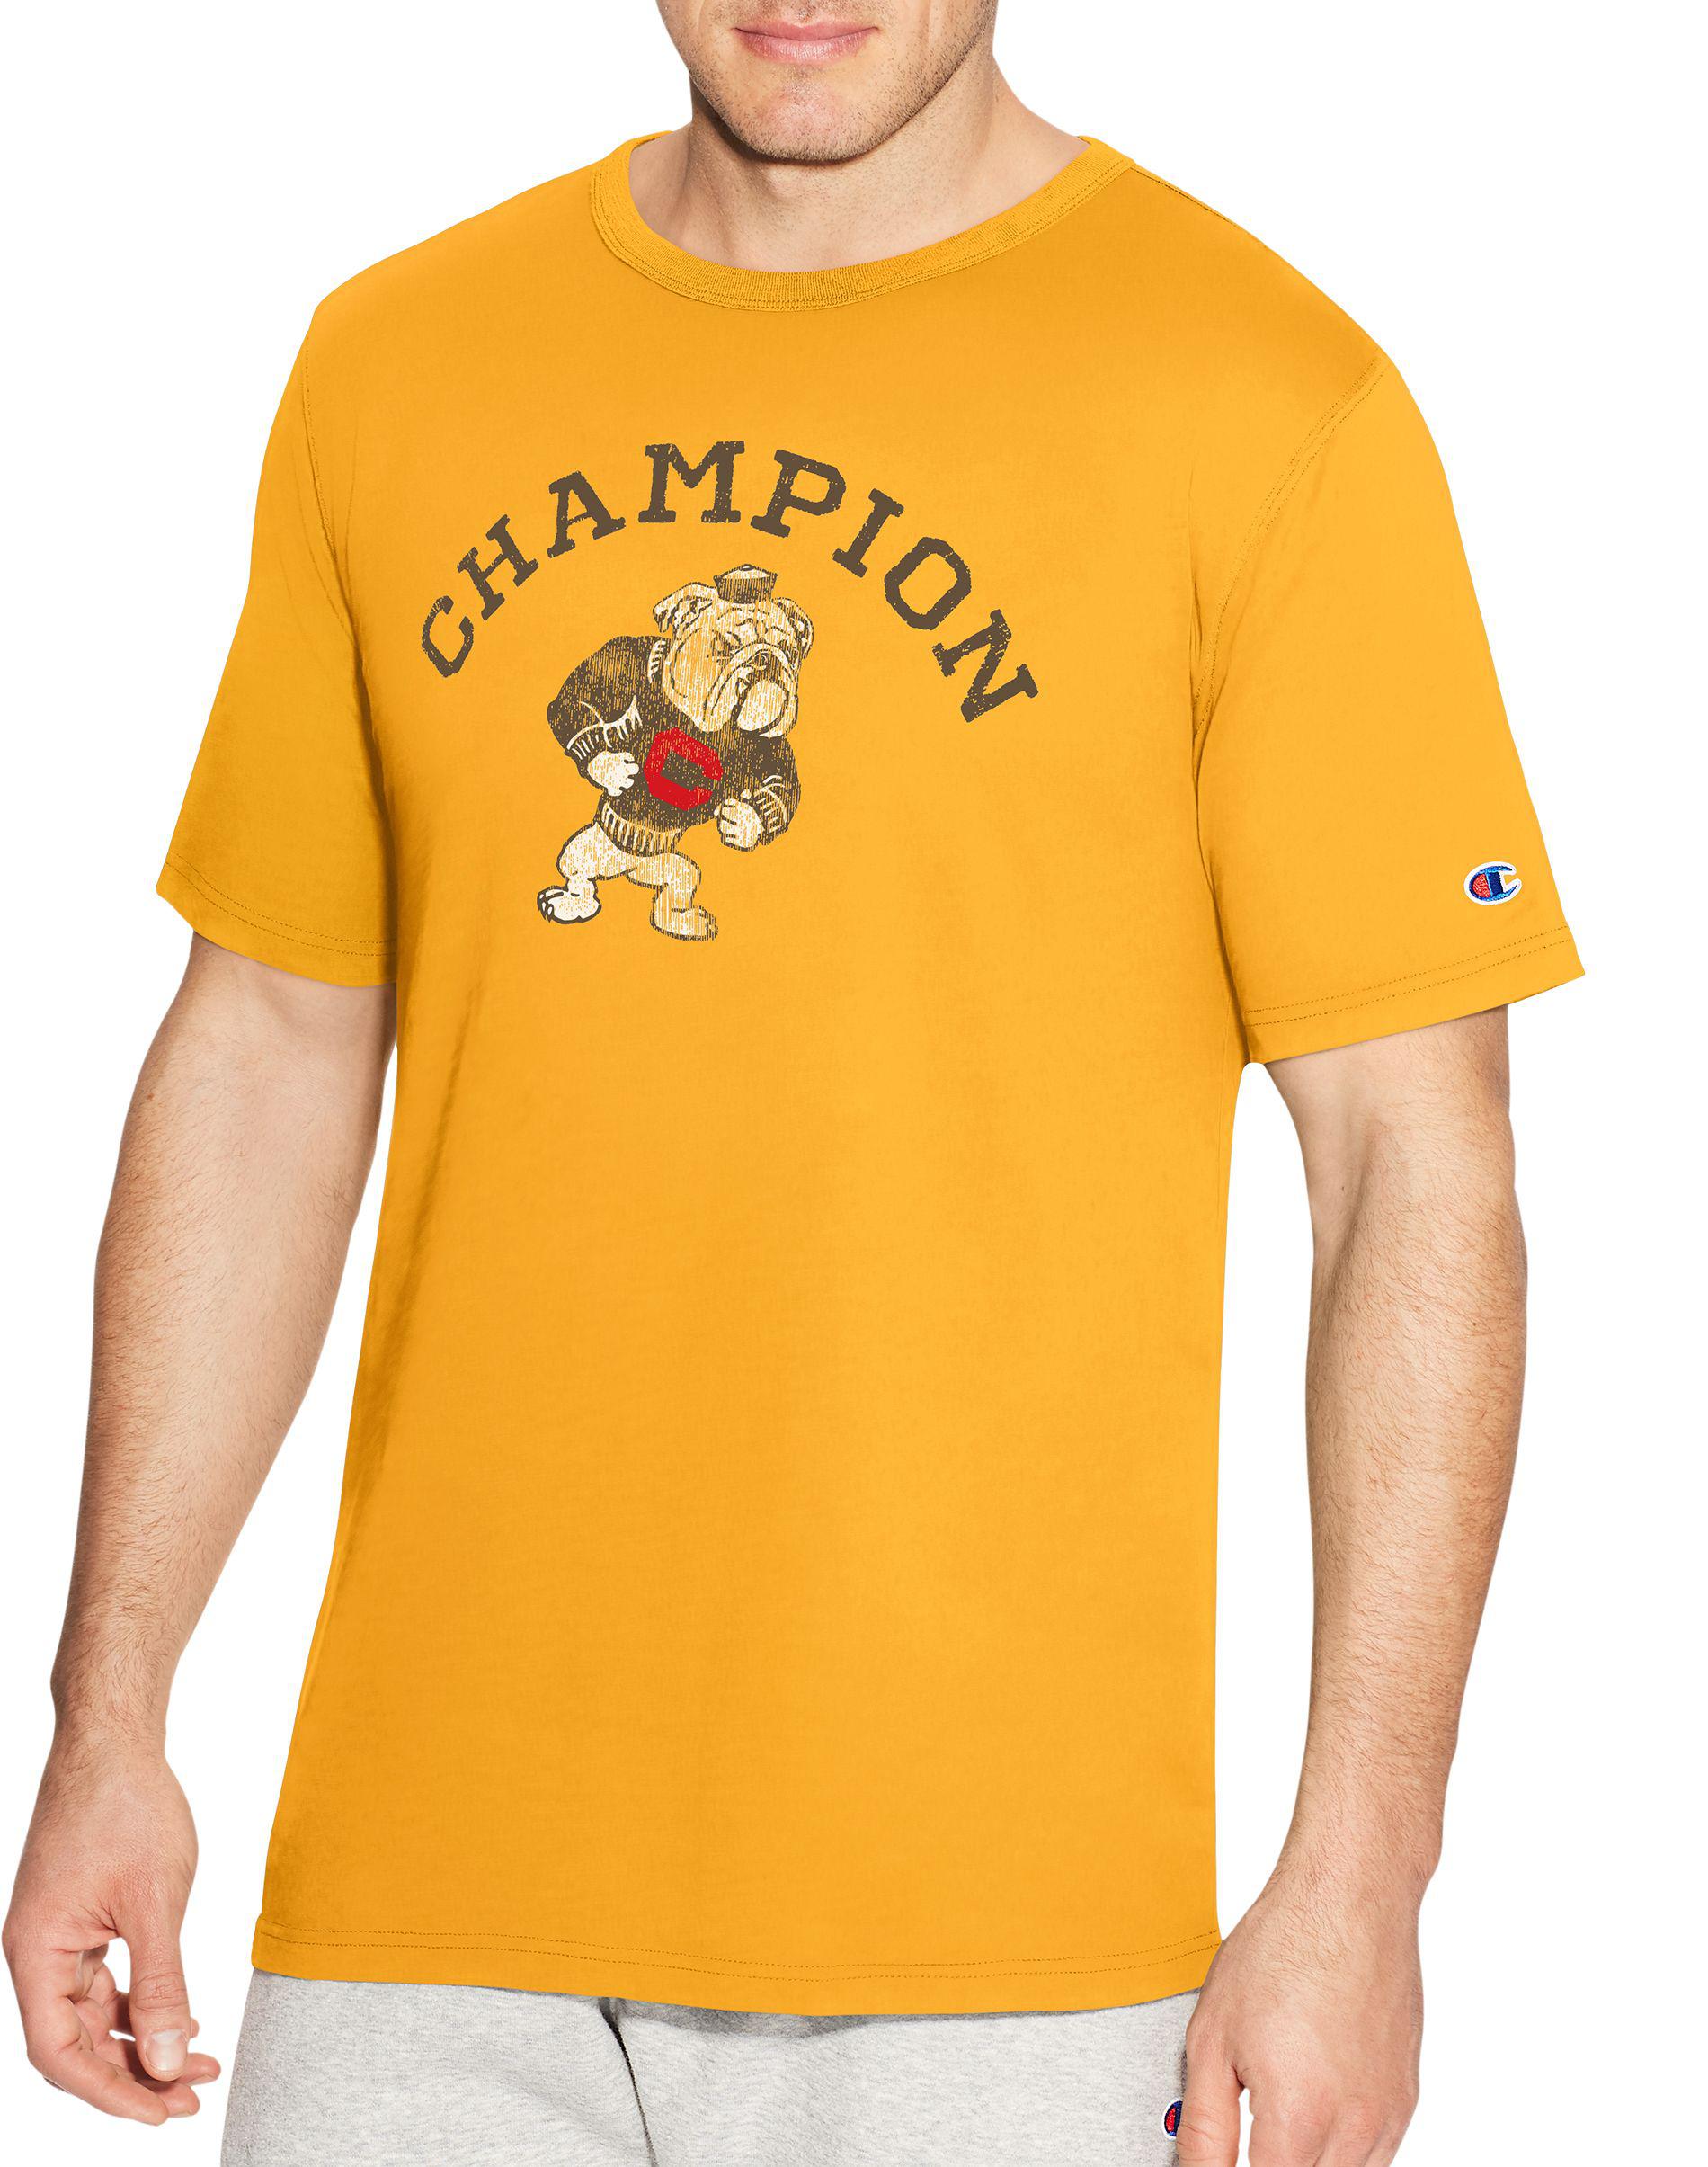 champion bulldog shirt off 64% - www 